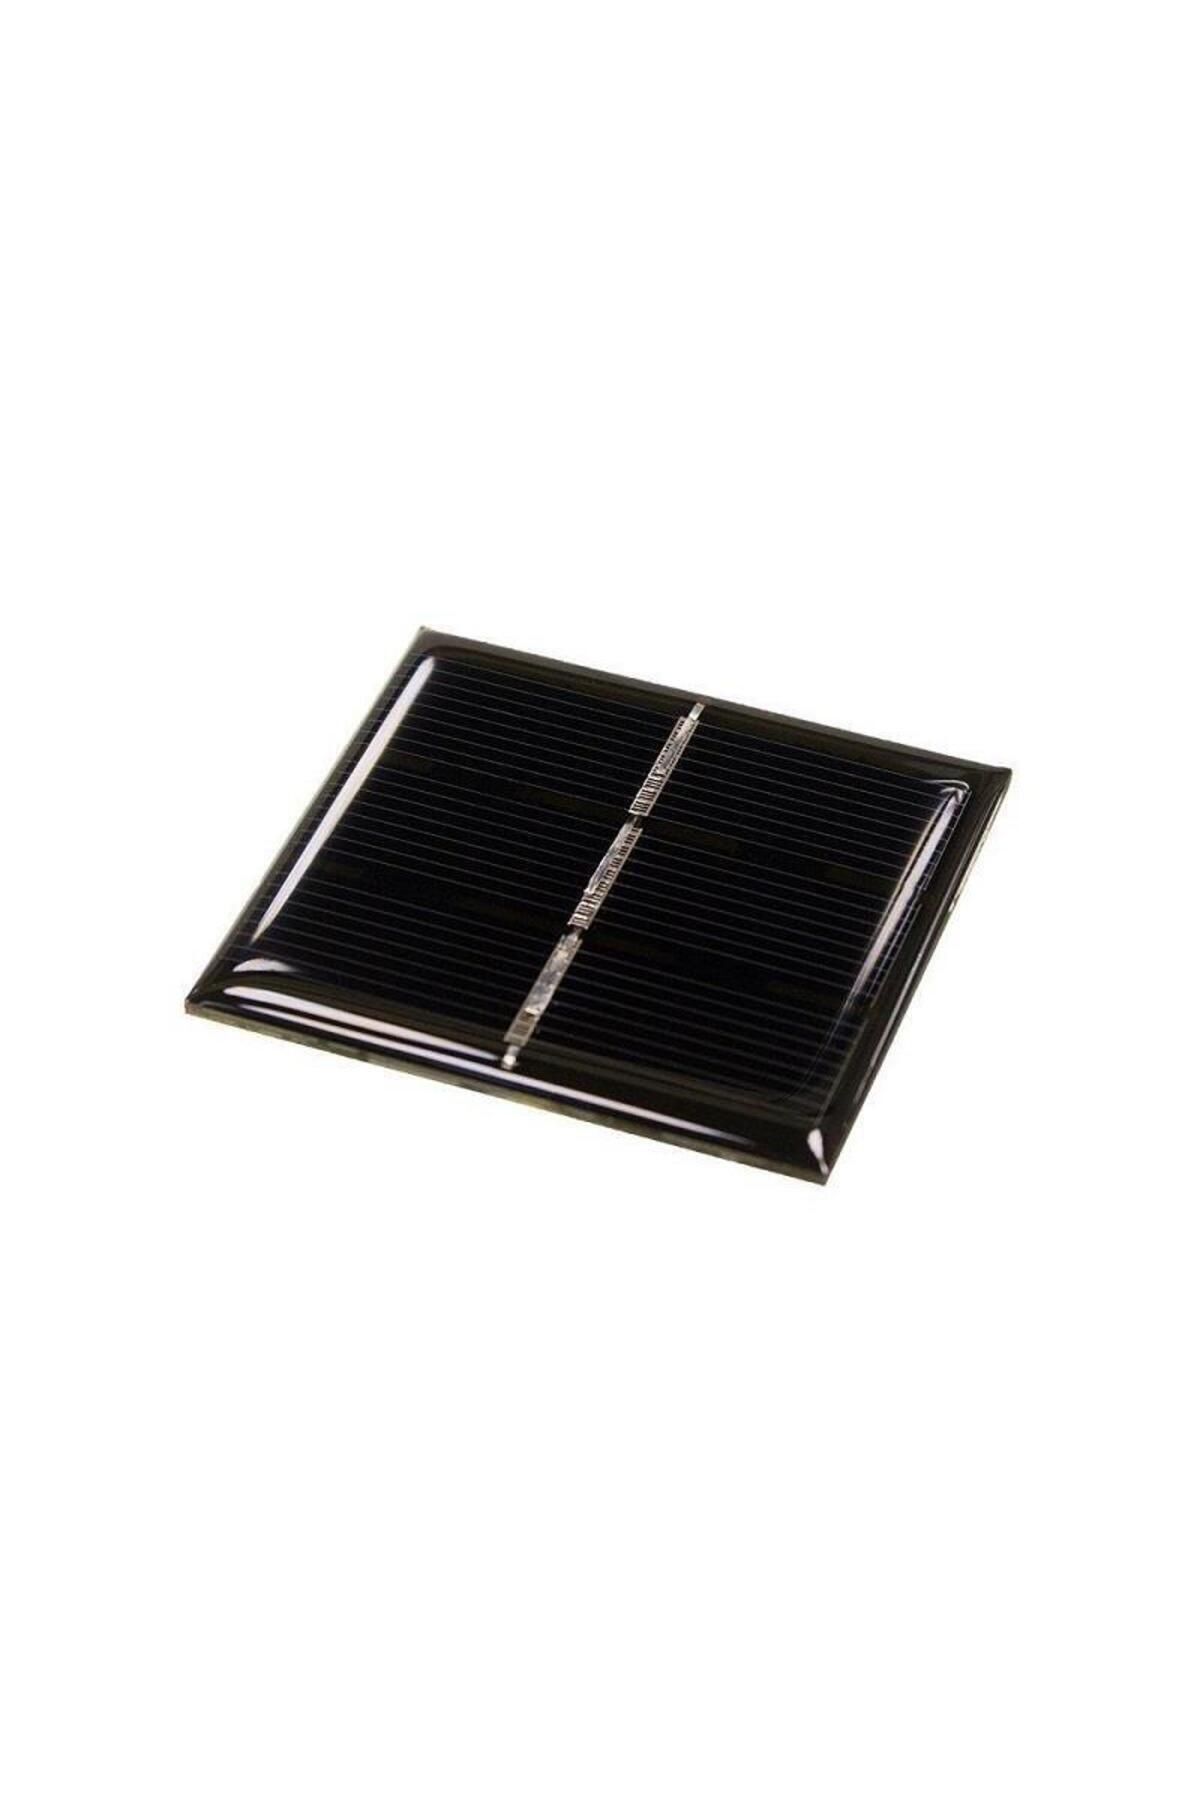 Robocombo 1,5v 125ma Güneş Paneli Solar Panel - Güneş Pili 40x40 Mm